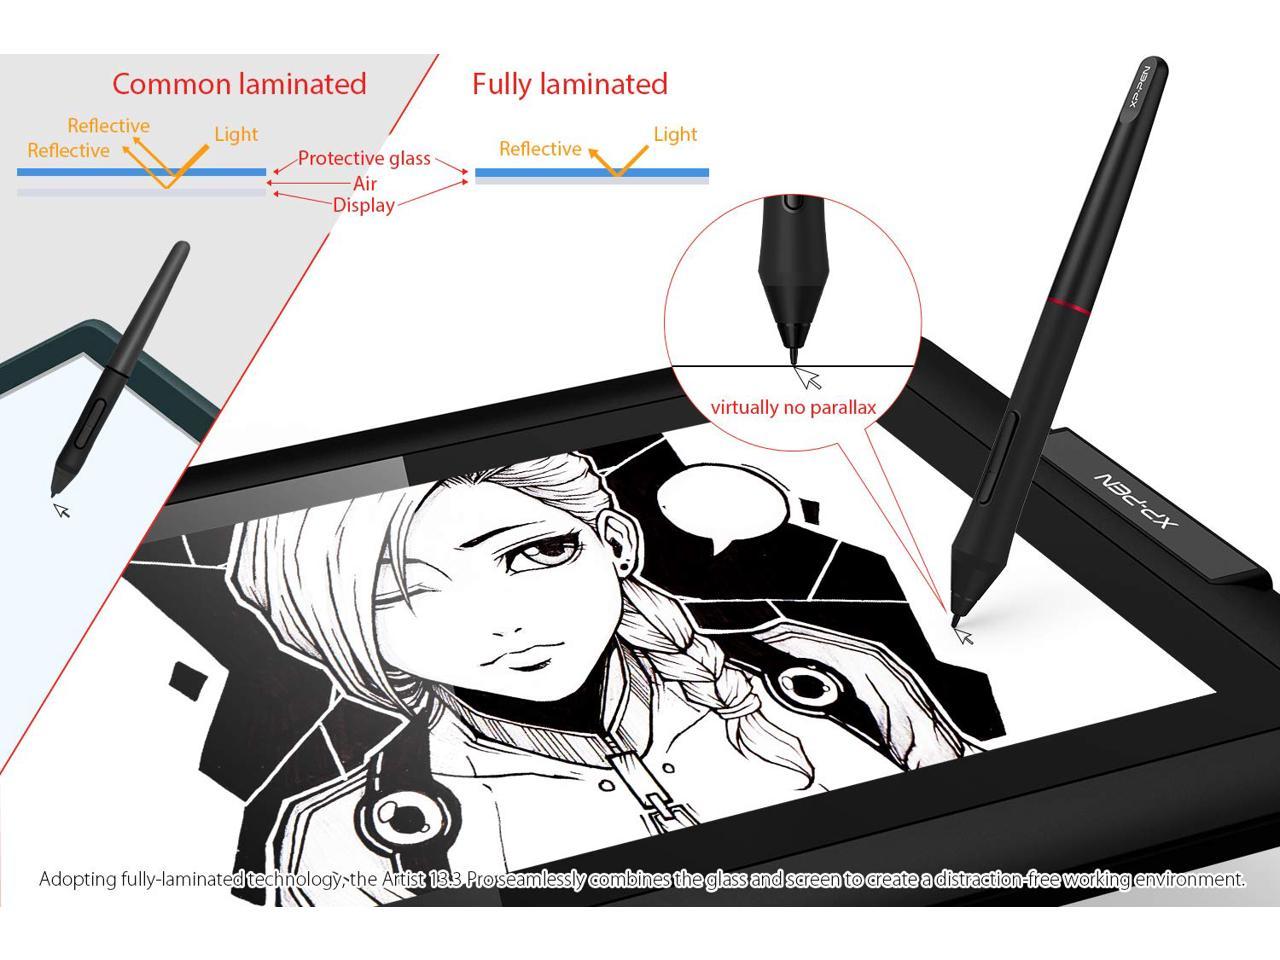 XP-PEN Artist13.3 Pro 13.3 Inch IPS Drawing Monitor Pen Display Full